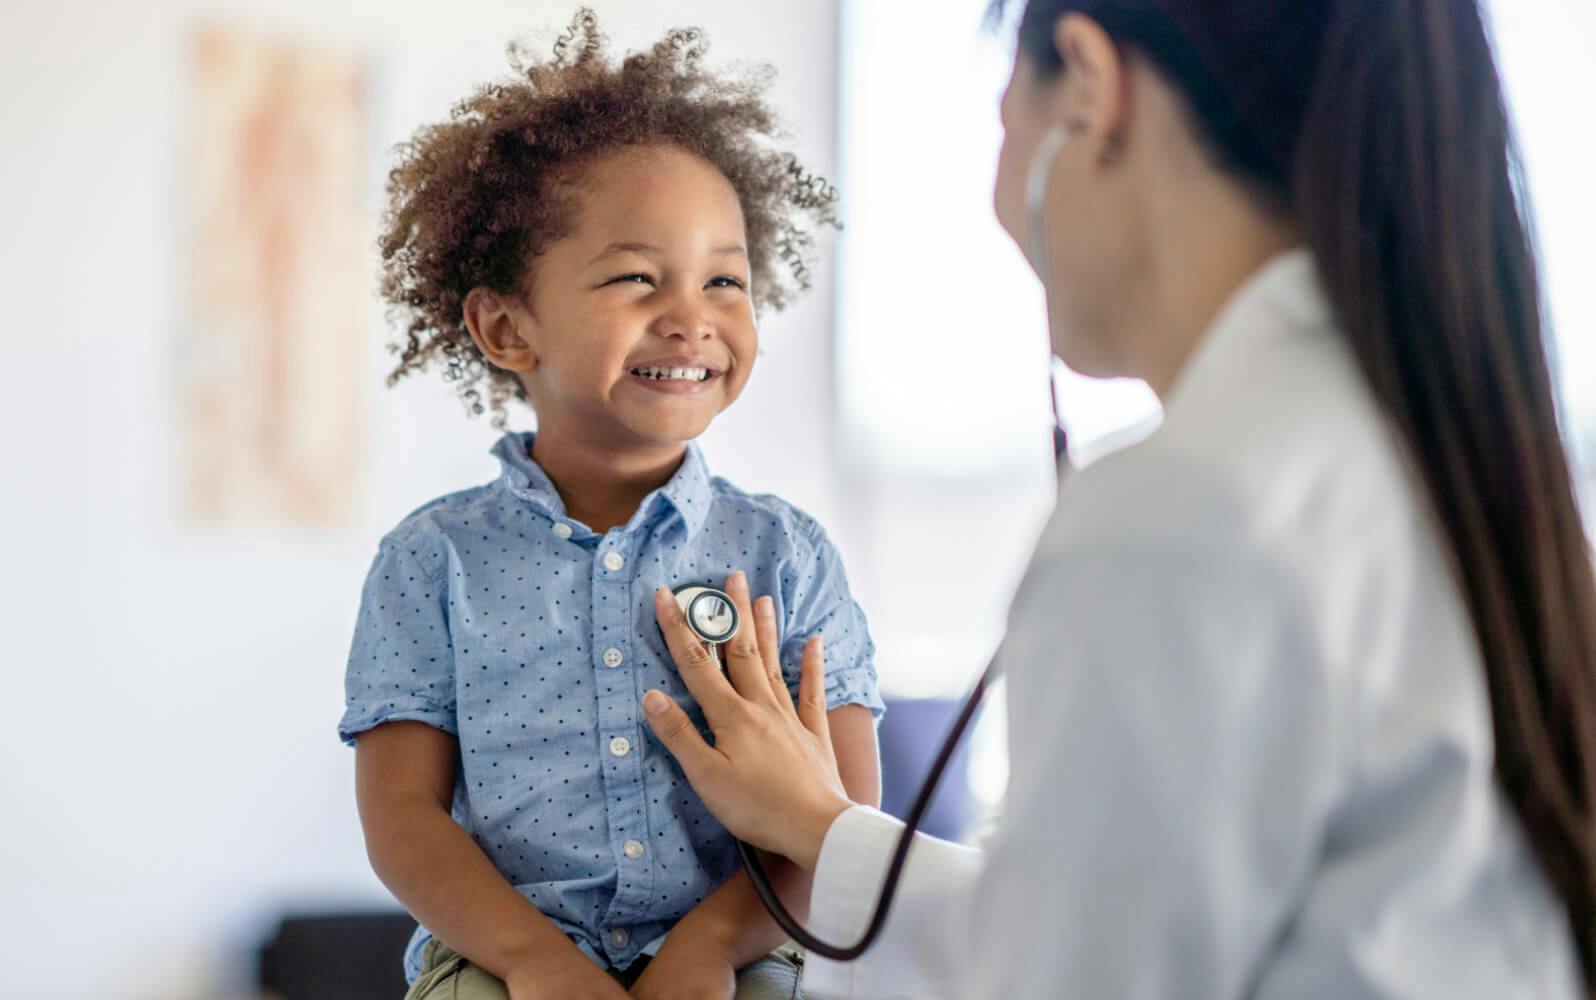 A healthcare professional examining a toddler